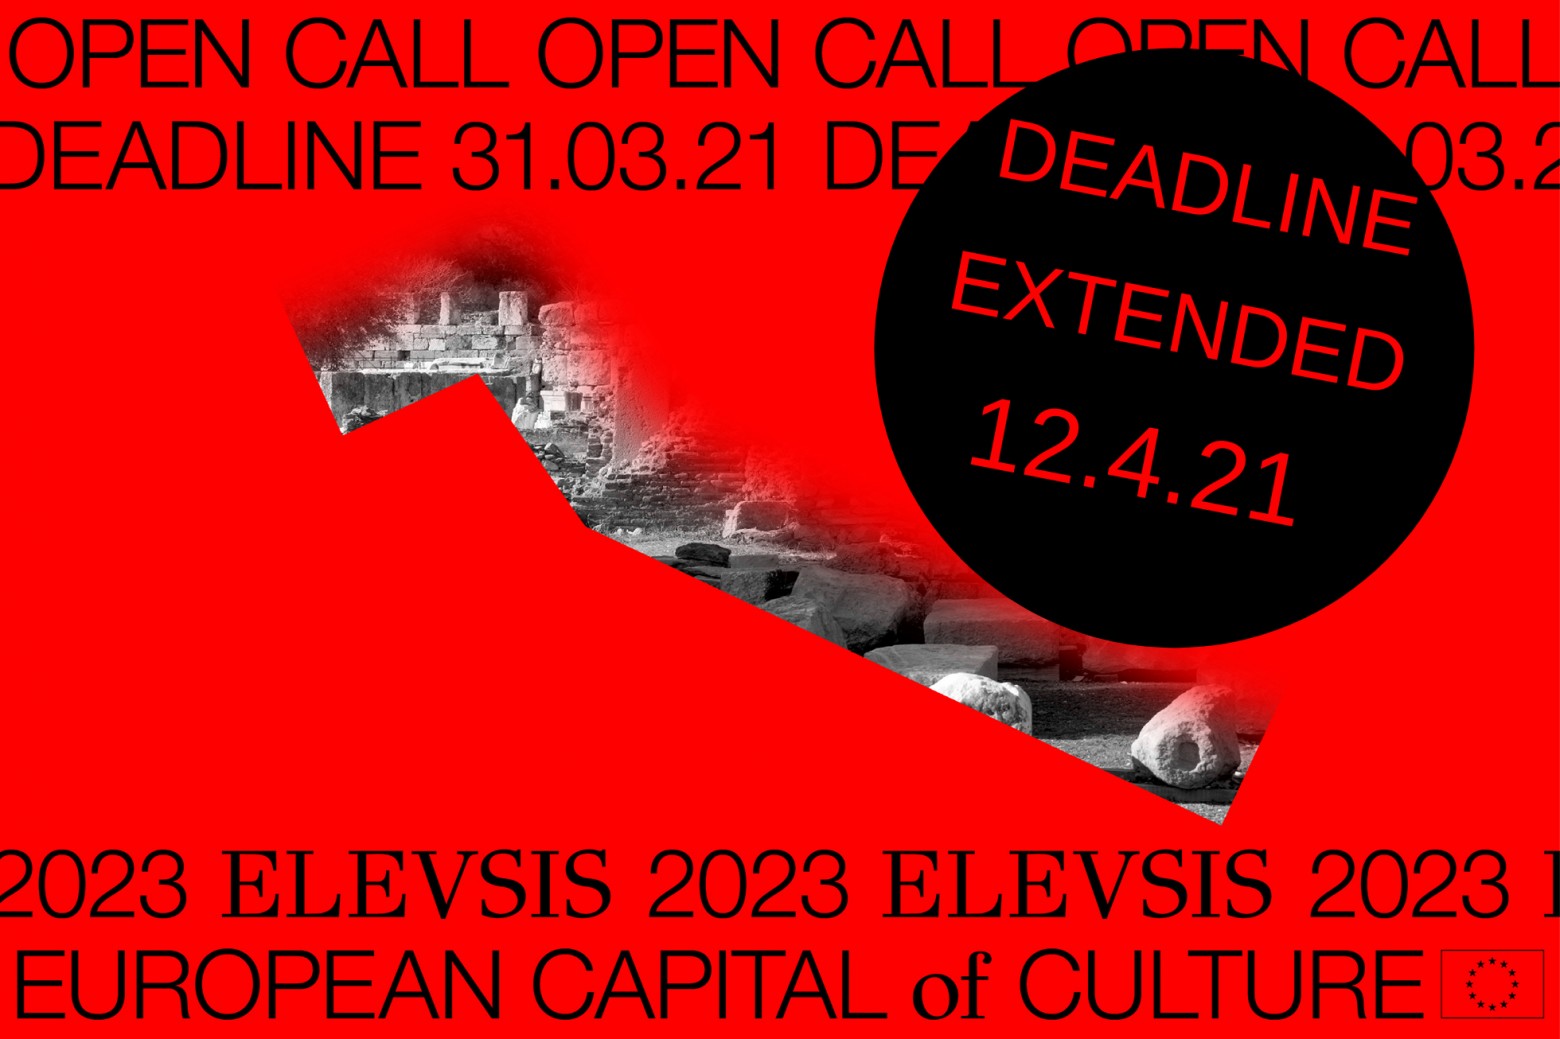 2023 ELEVSIS : Παρατείνεται έως τις 12 Απριλίου η προθεσμία υποβολής καλλιτεχνικών προτάσεων